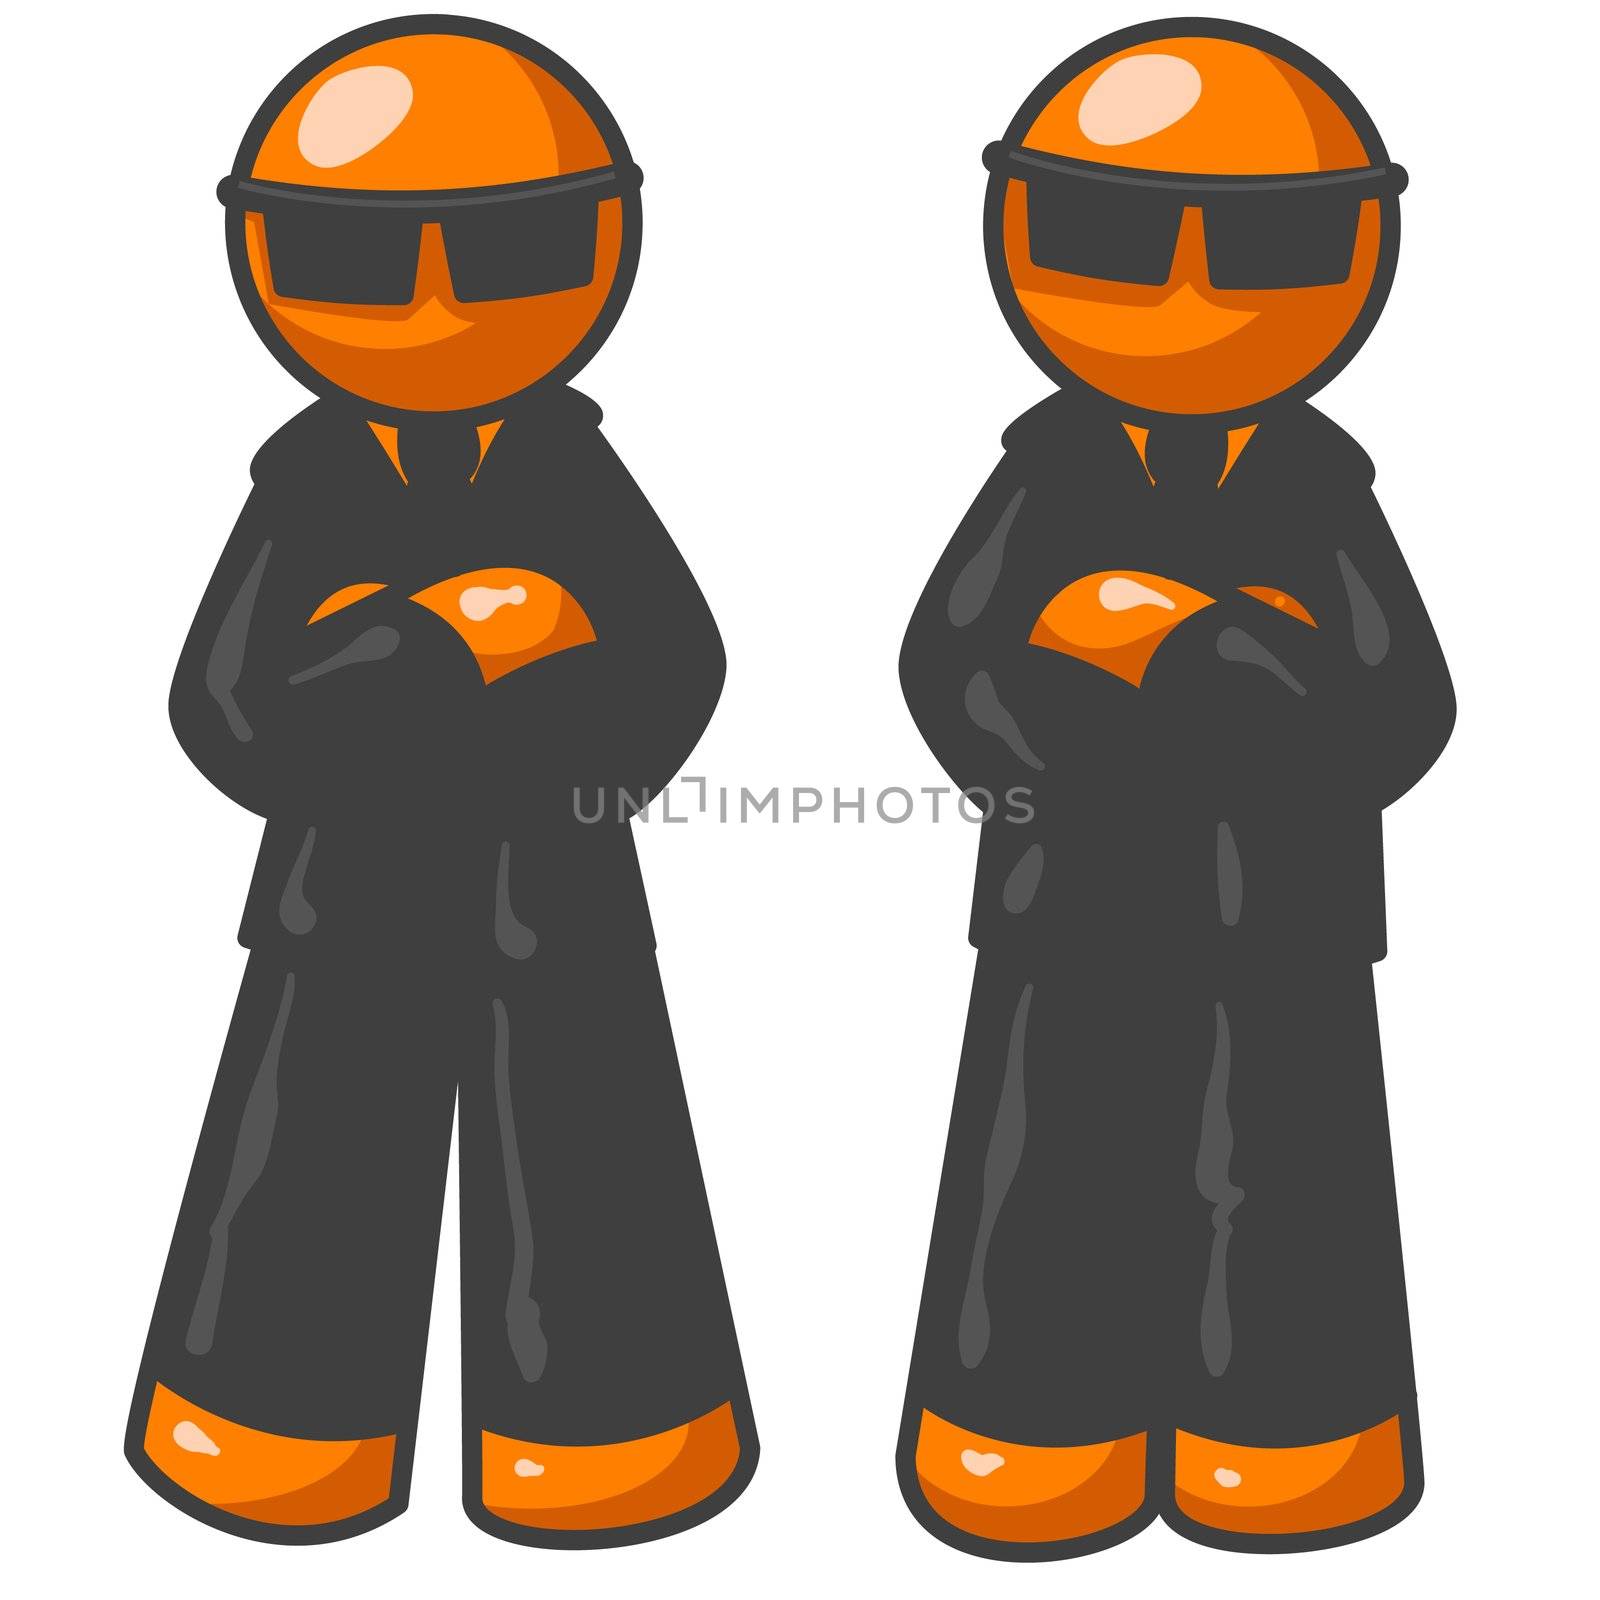 Two orange men wearing suits that are dark black. 